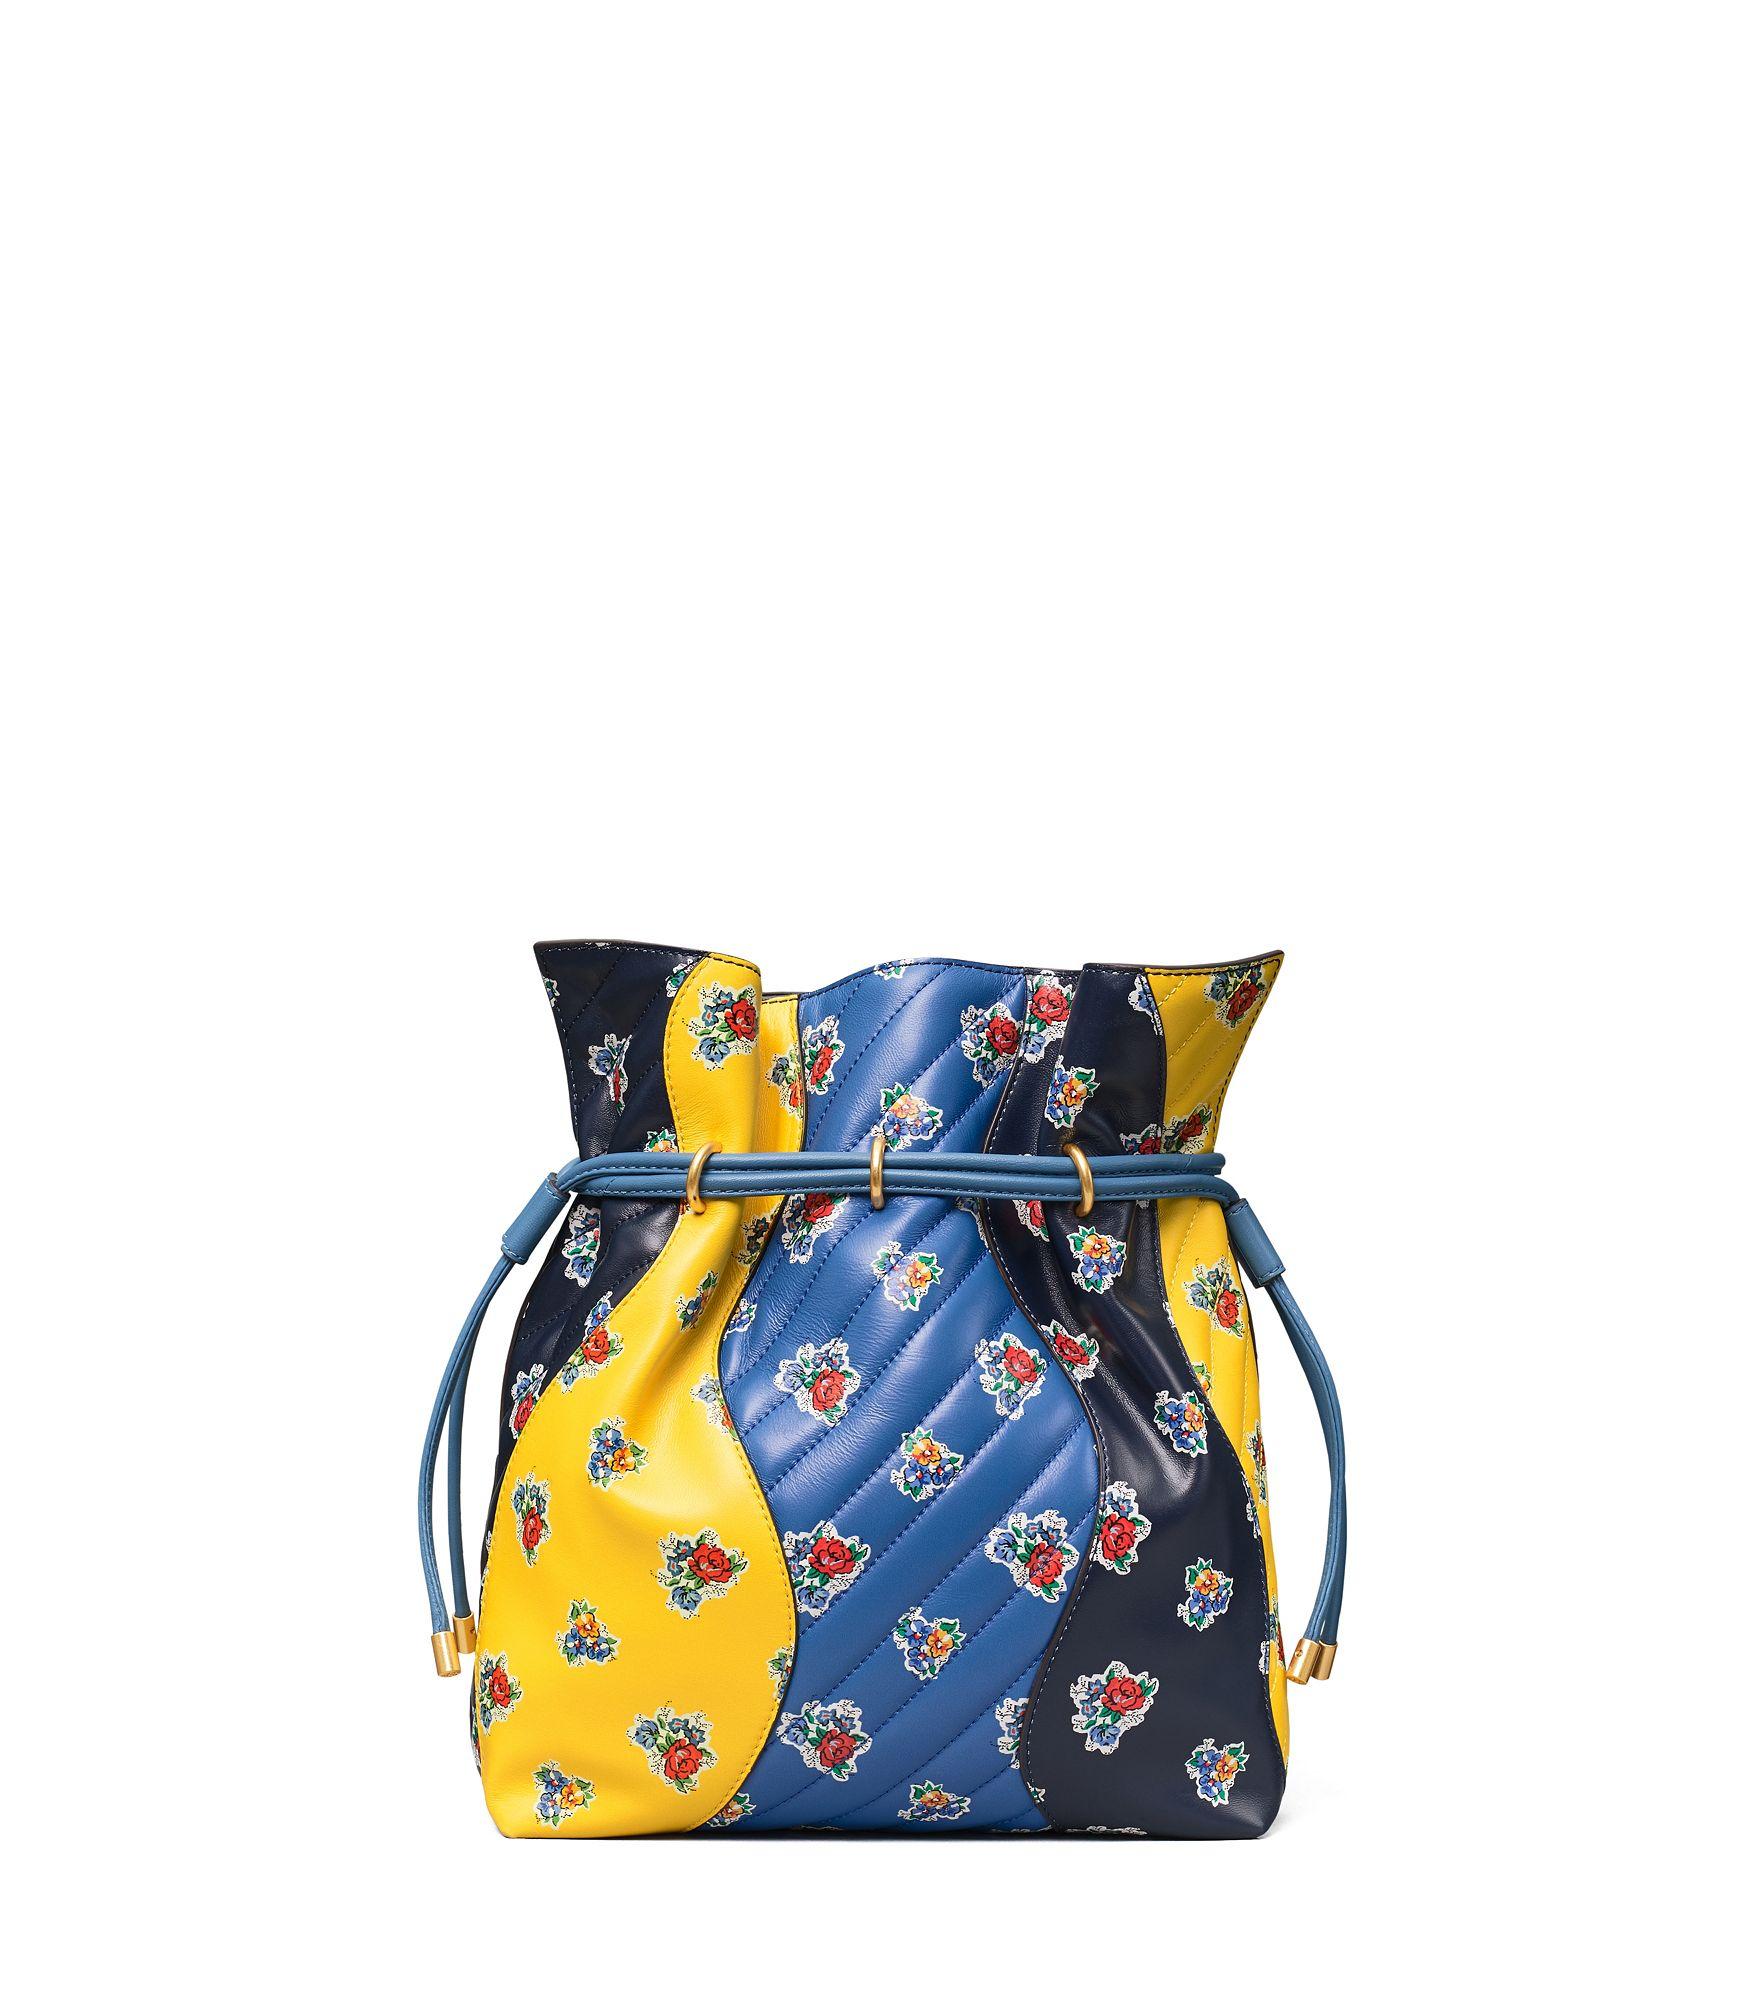 Tory Burch Kira Chevron Floral Patchwork Bucket Bag in Blue | Lyst